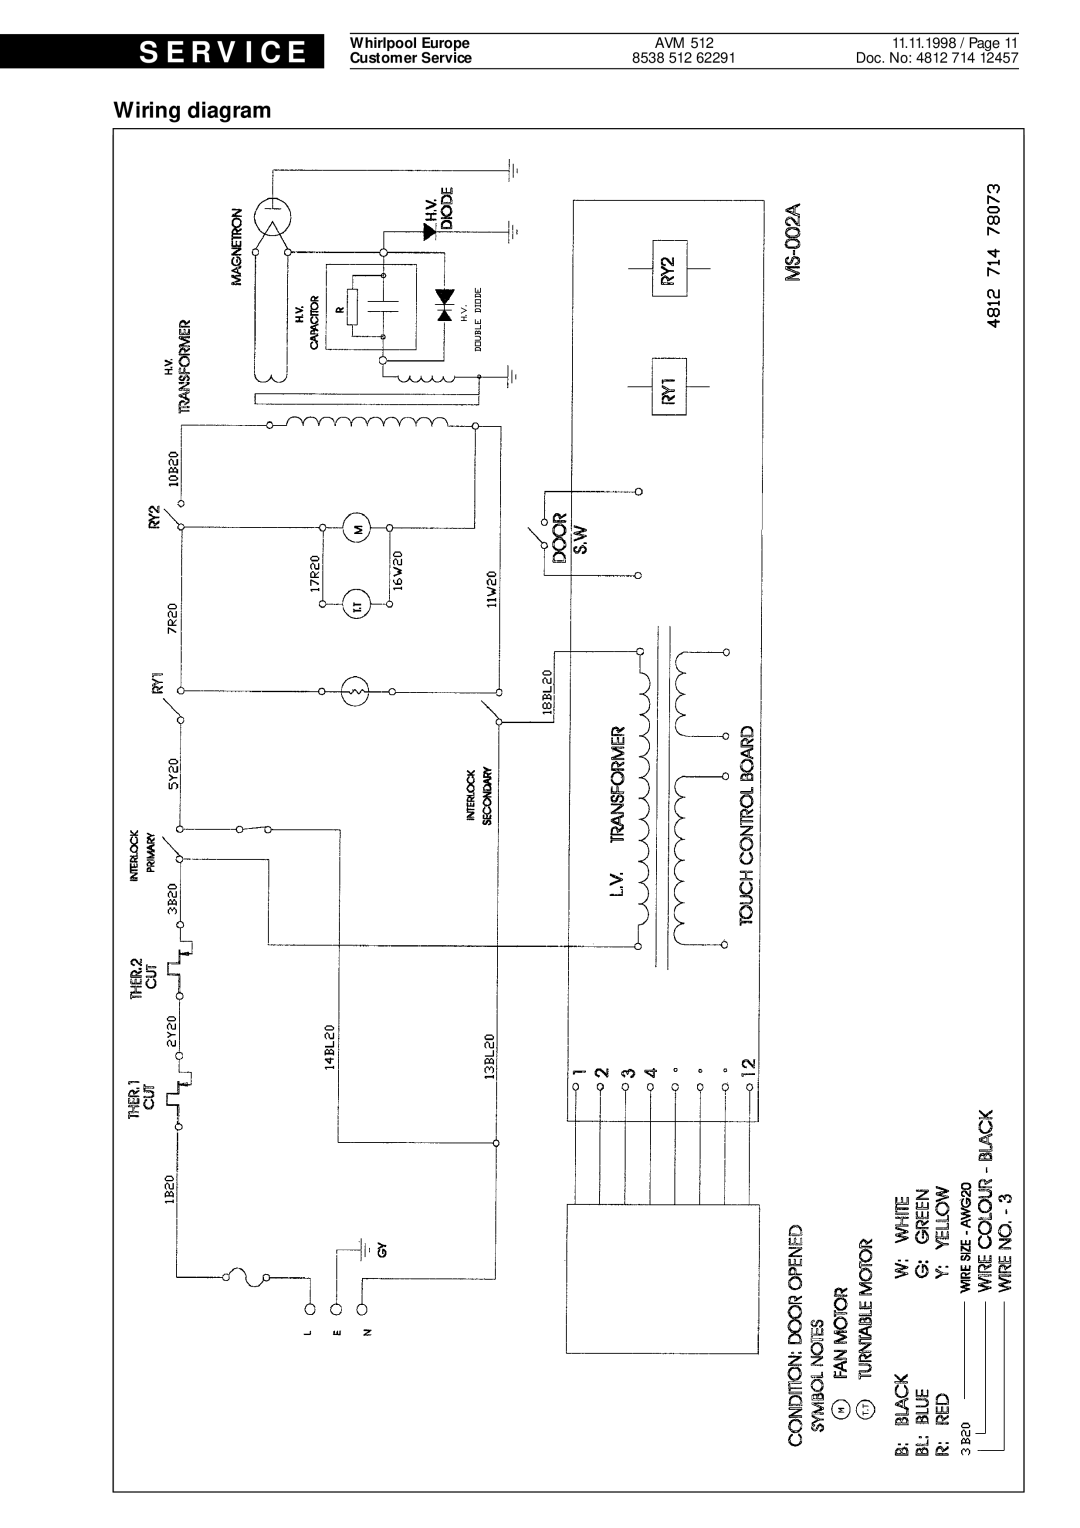 Whirlpool AVM 512 Wiring diagram, S E R V I C E, Whirlpool Europe, 11.11.1998 / Page, Customer Service, 8538 512 